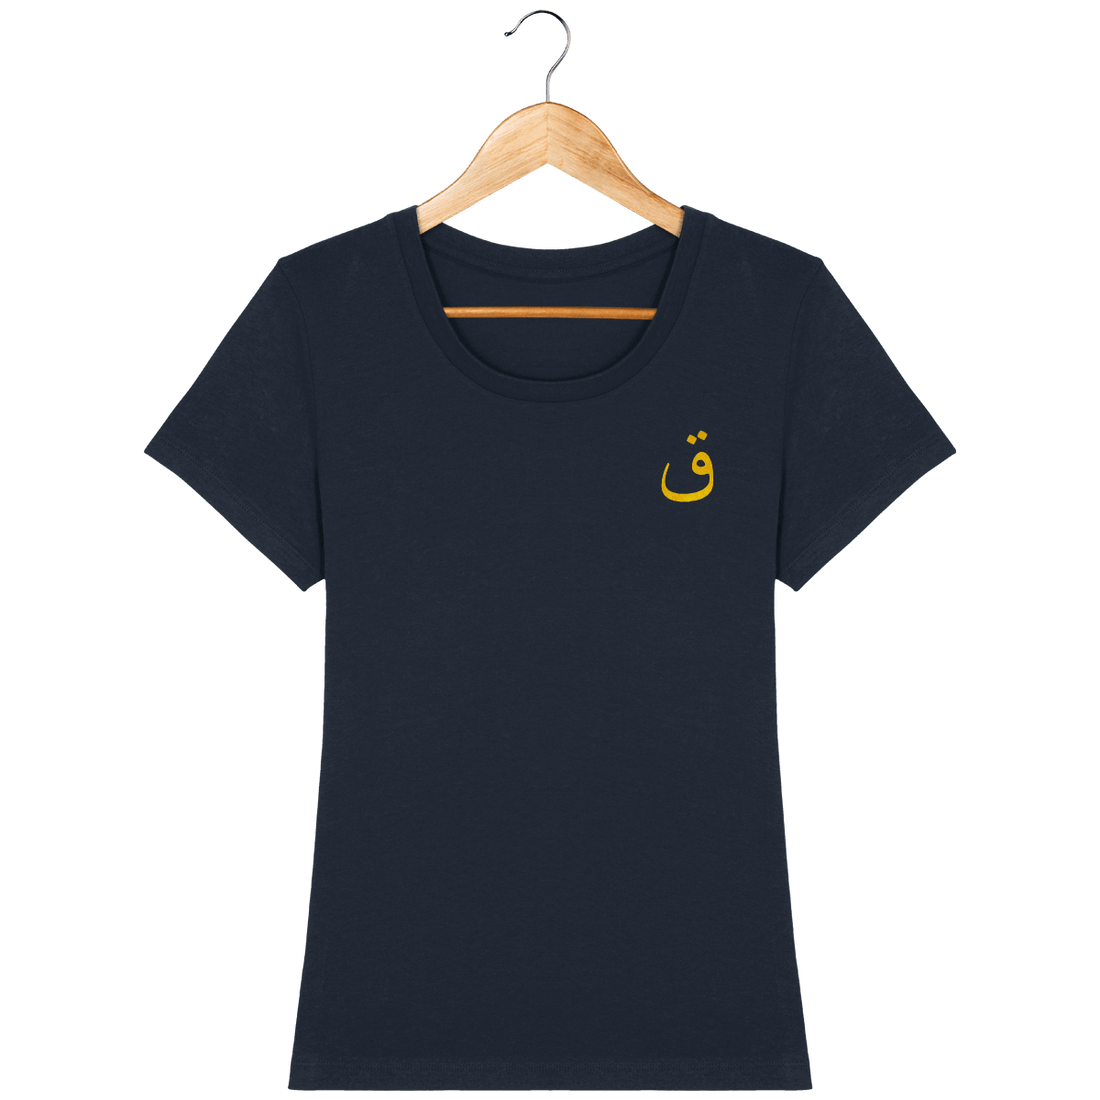 Femme>Tee-shirts - T-Shirt Femme <br> Lettre Arabe Qaaf